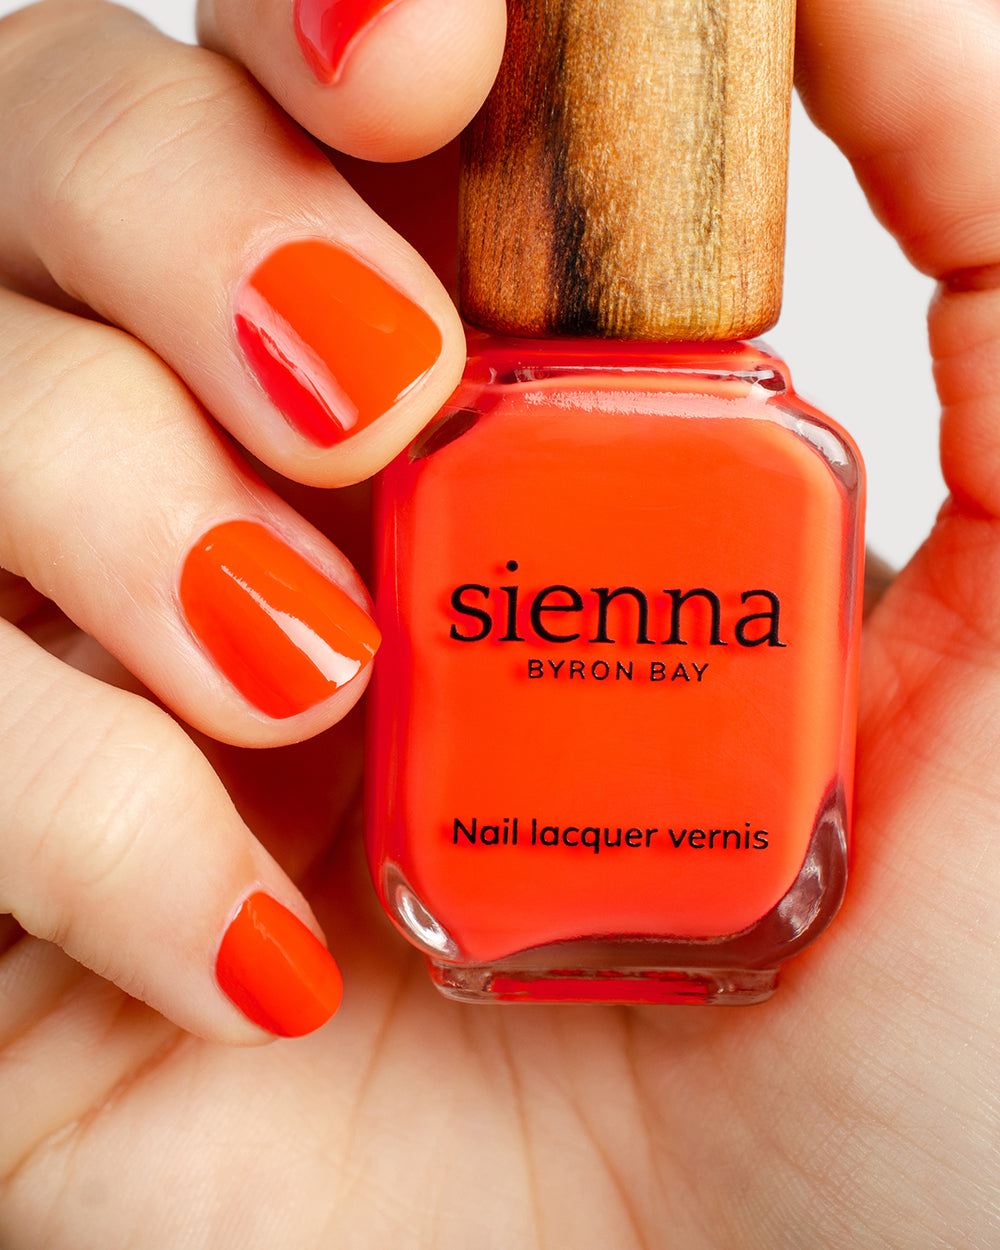 Tangerine nail polish hand swatch on fair skin tone holding sienna bottle close-up